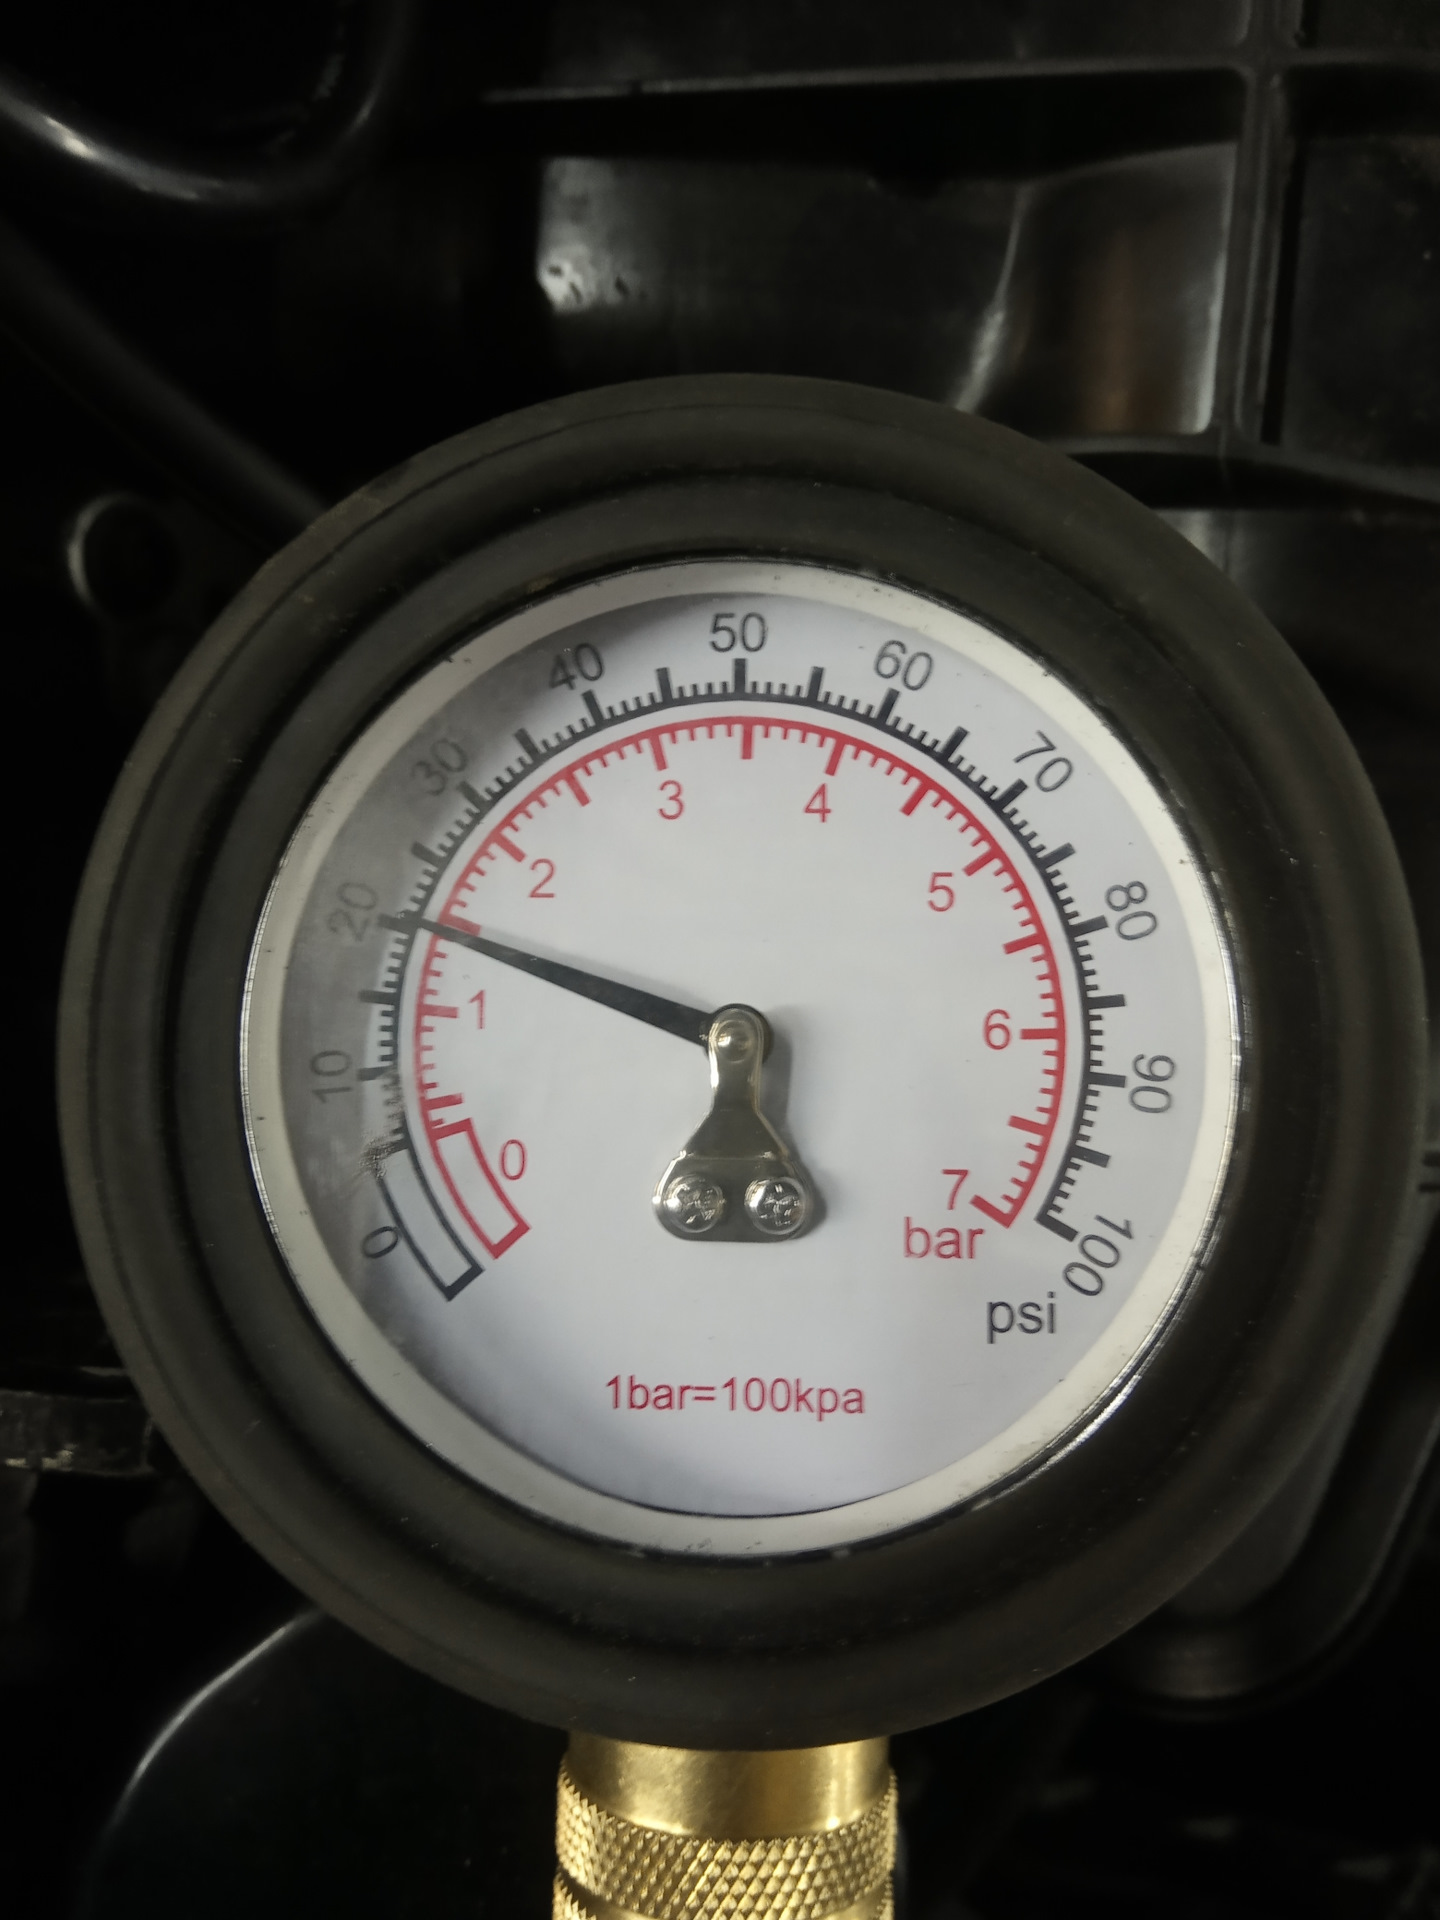 Ер6 давление масла. Замер давления масла ep6. CDNB 2.0 TFSI давление масла. Двигатель ea211 замер давления масла. Замер давления масла ADR Audi.